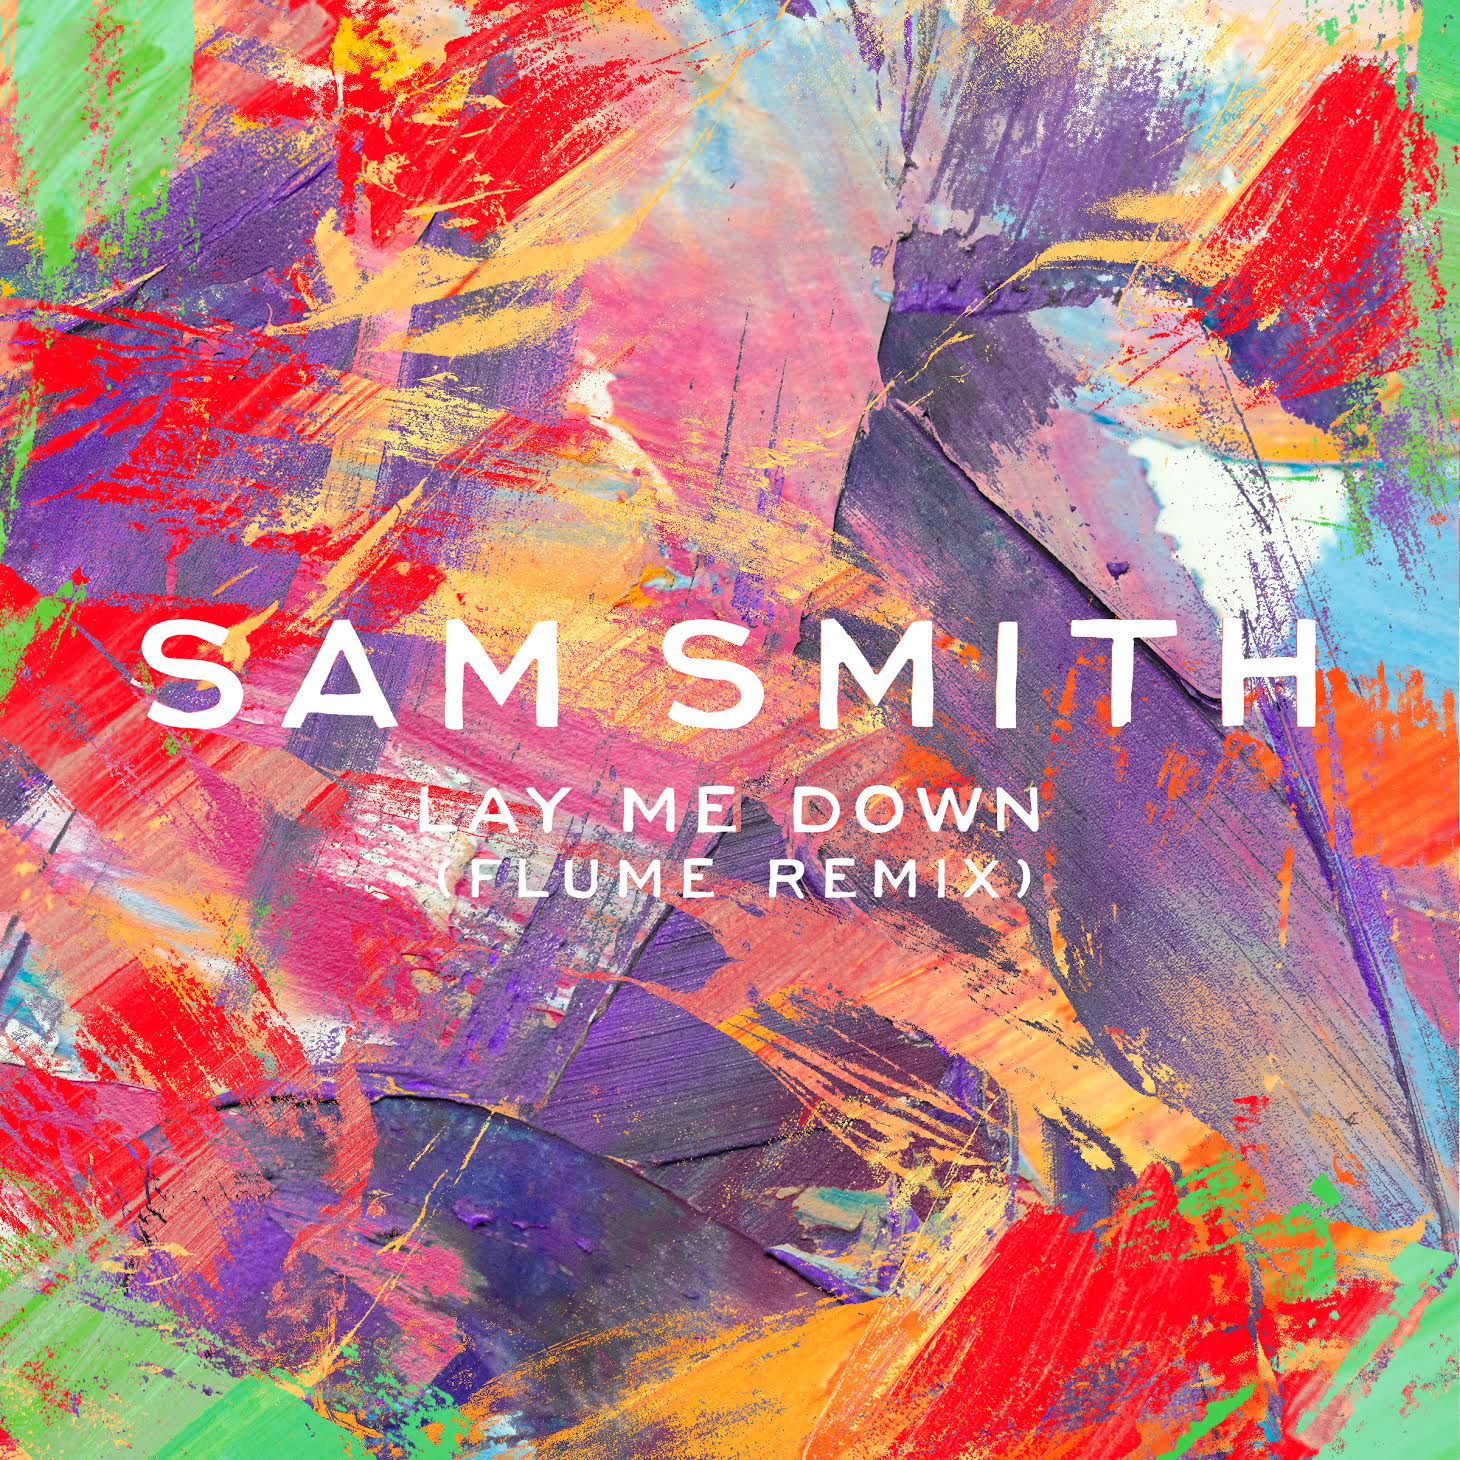 Preuzimanje datoteka Sam Smith - Lay Me Down (Flume Remix)